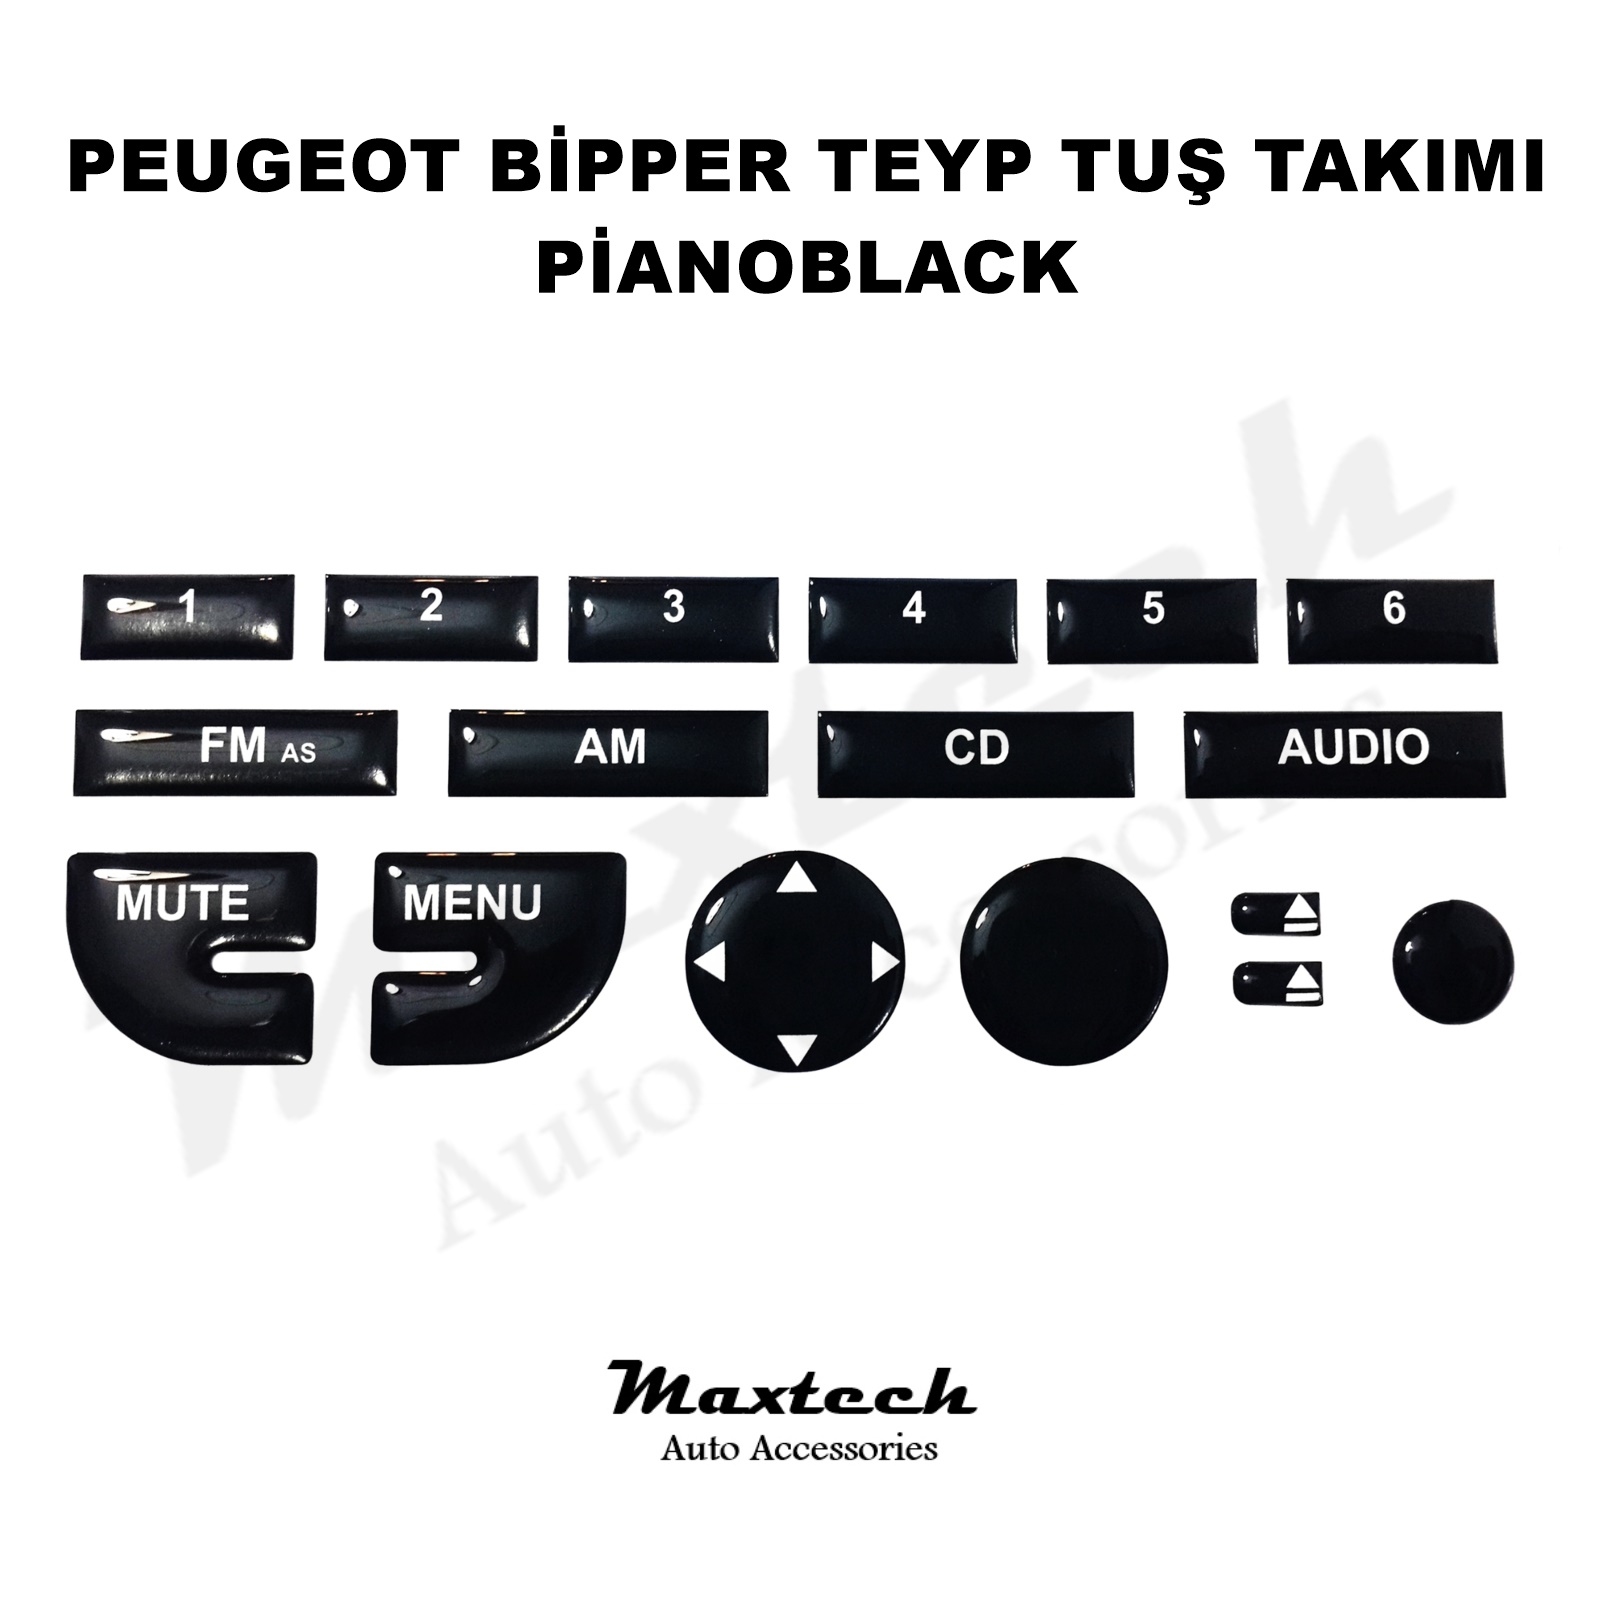 Peugeot Bipper Teyp Tuş Takımı Pianoblack